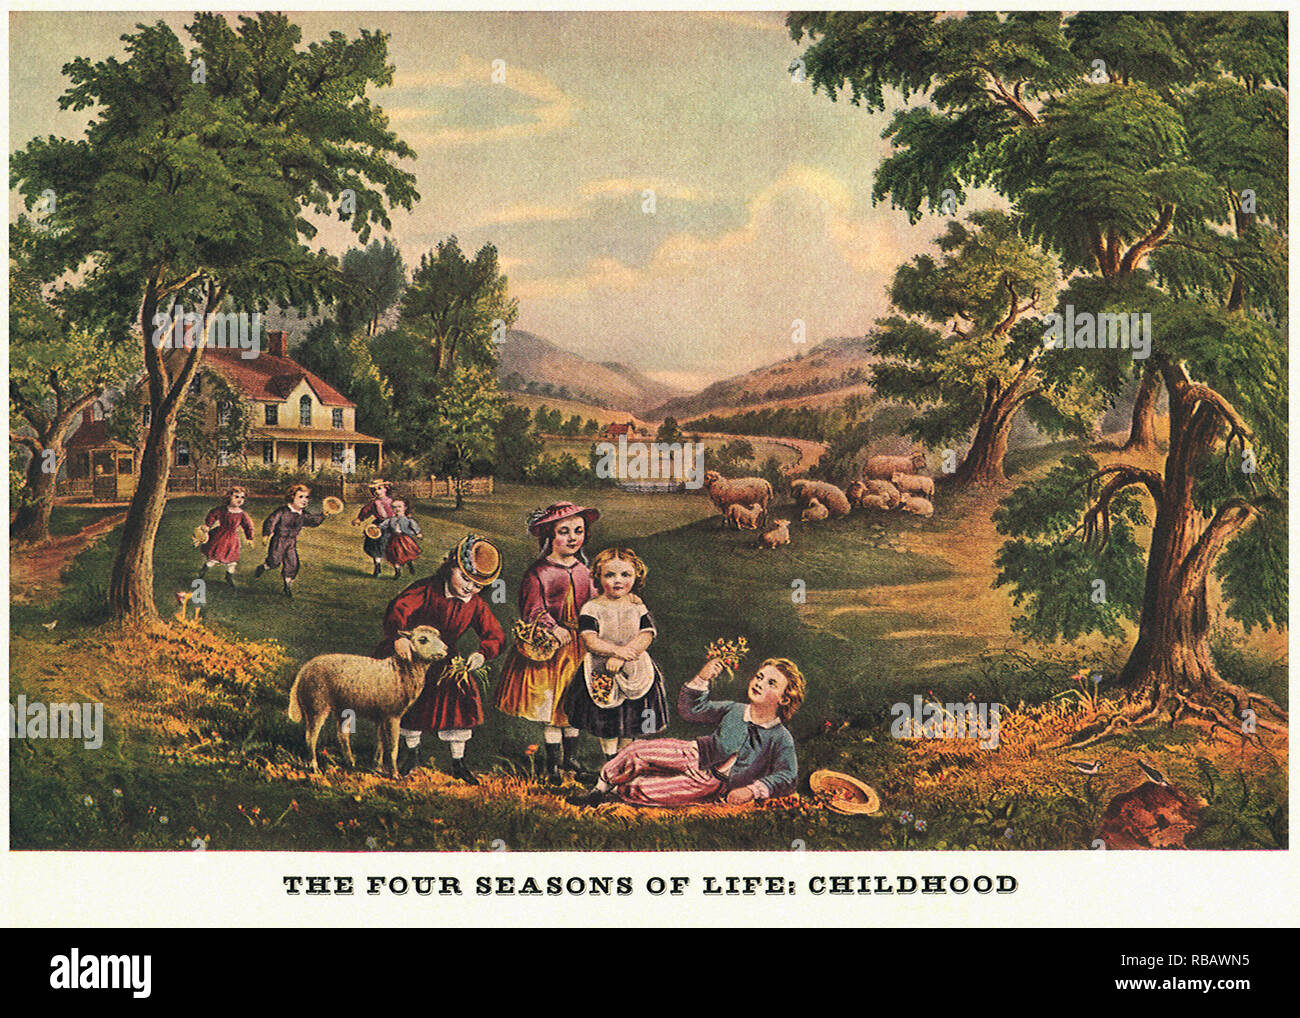 The Four Seasons of Life, Childhood. Stock Photo